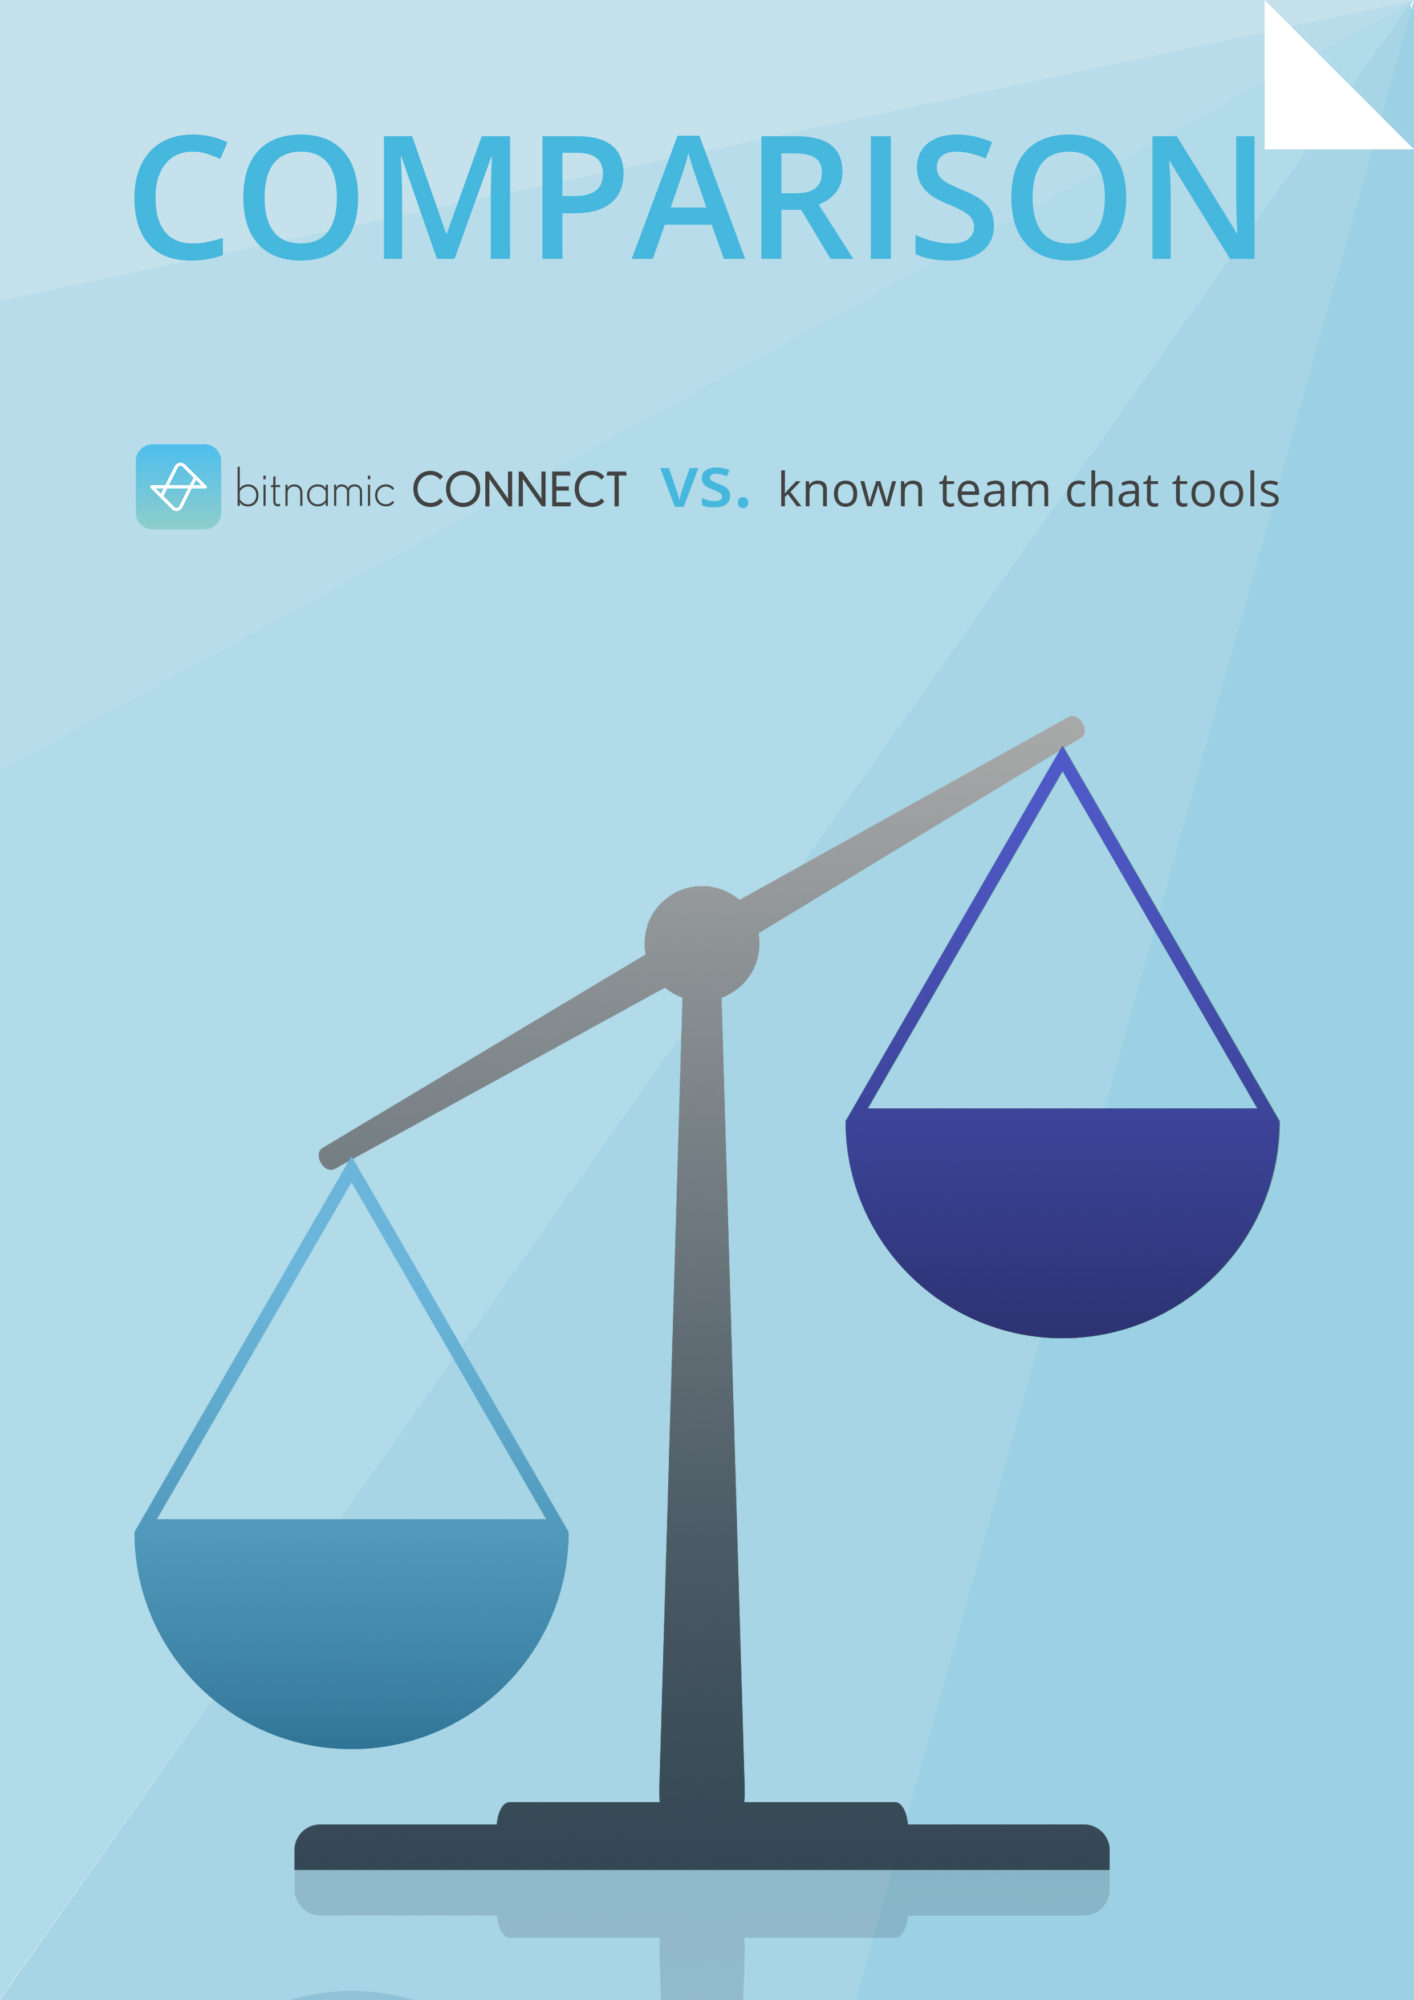 Comparison bitnamic CONNECT vs team chat tools